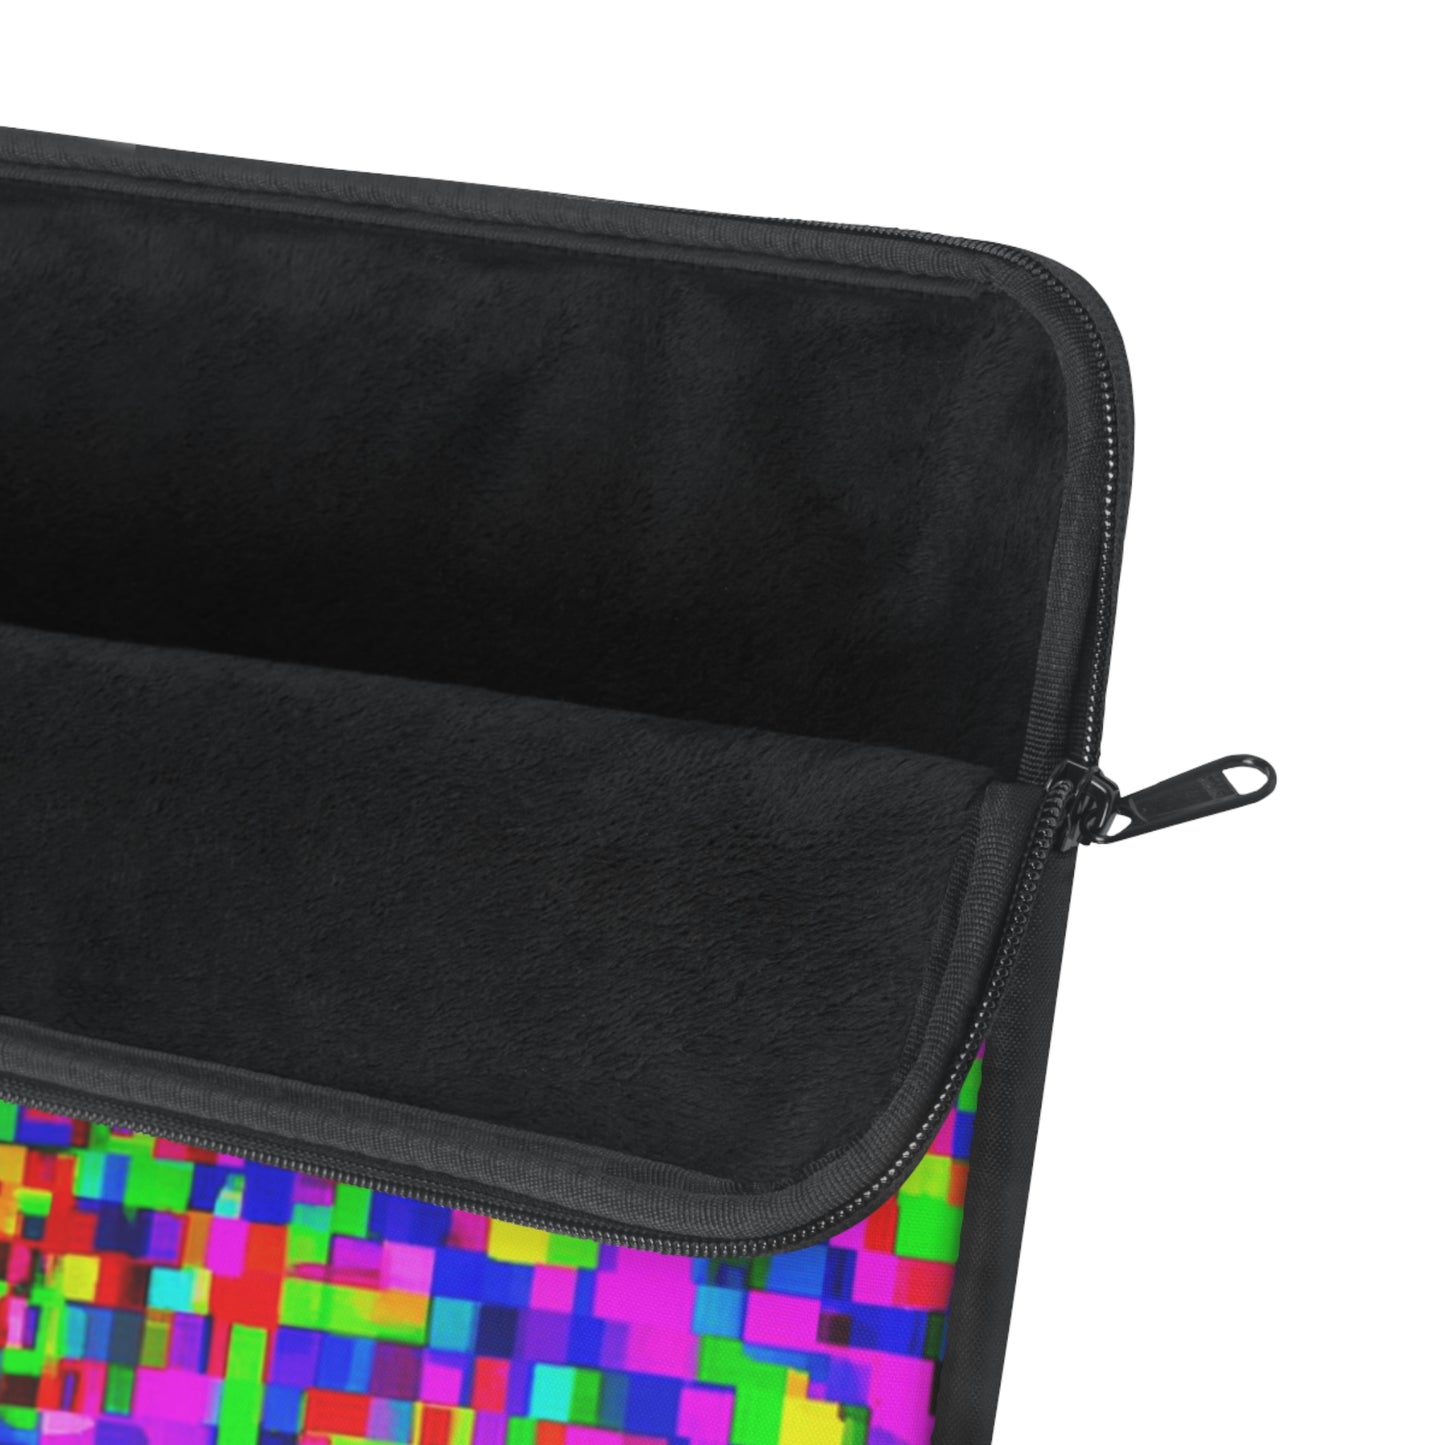 Sparky Sparkson - Psychedelic Laptop Computer Sleeve Storage Case Bag